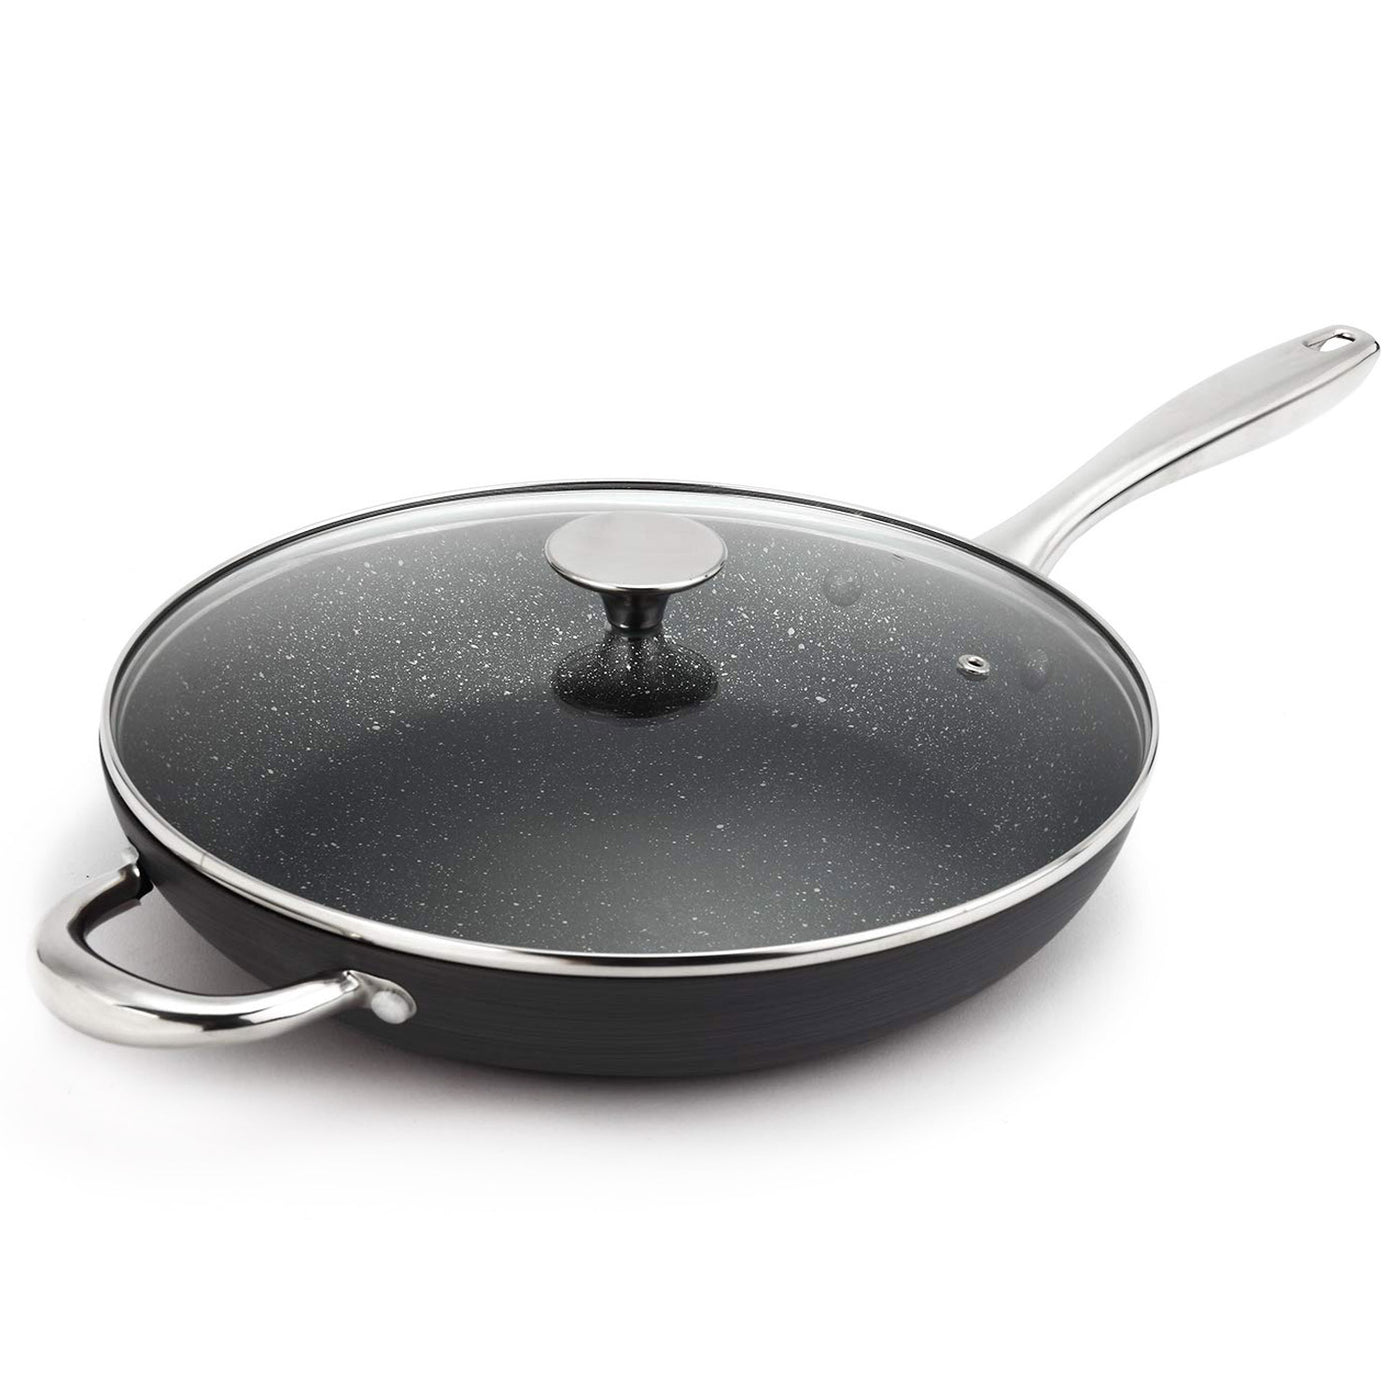 oven proof frying pan